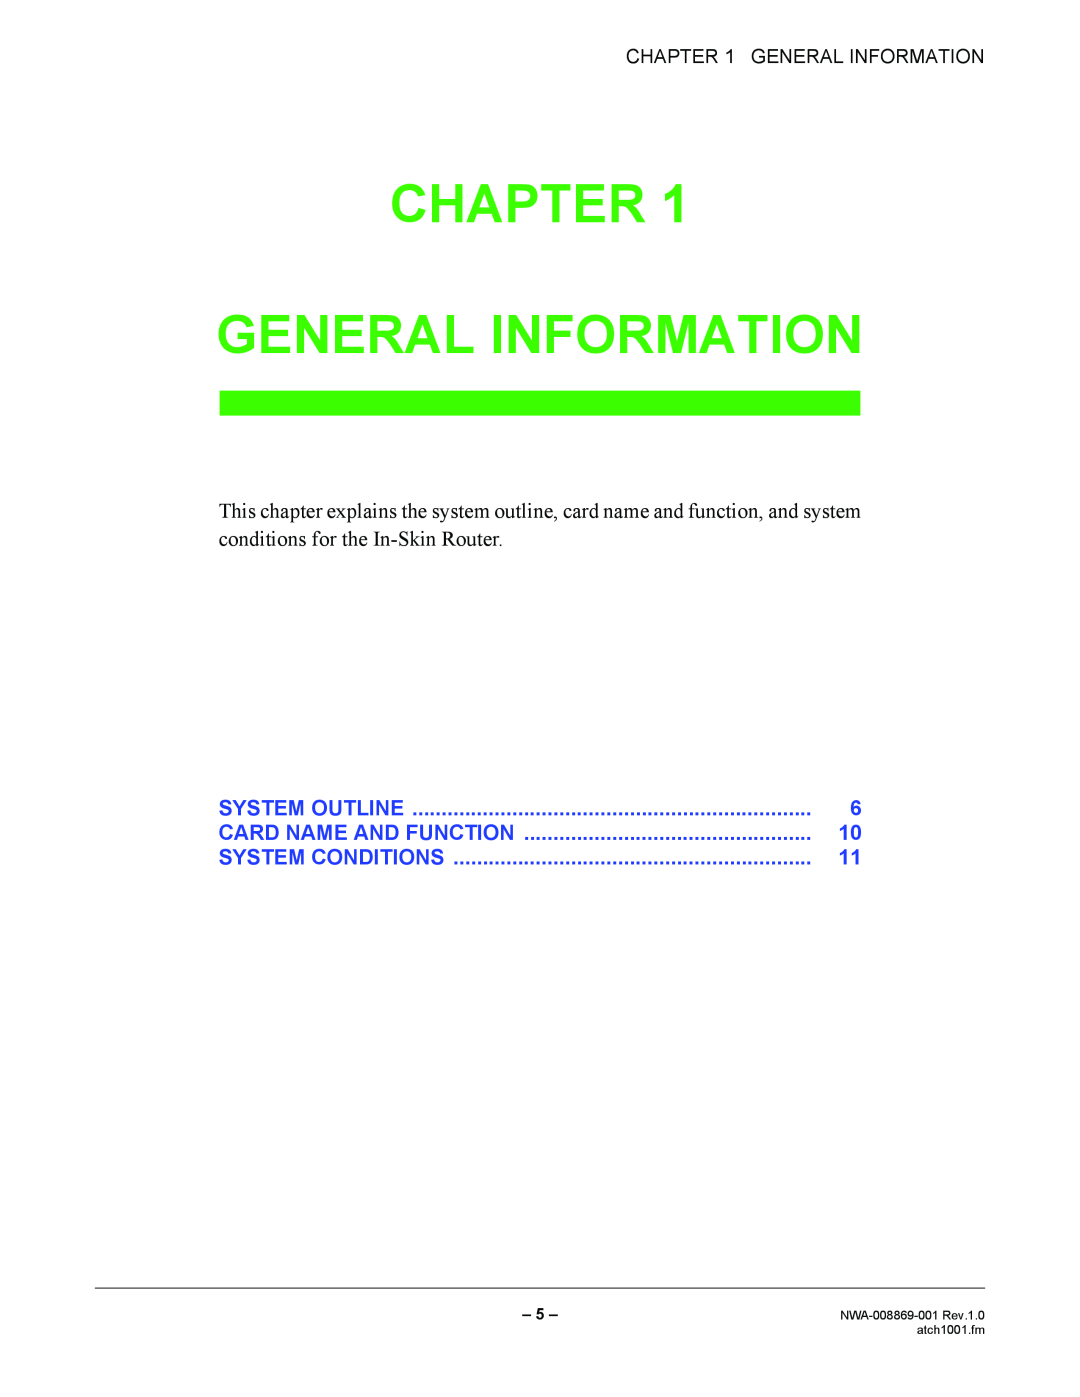 NEC manual Chapter General Information, NWA-008869-001 Rev.1.0 